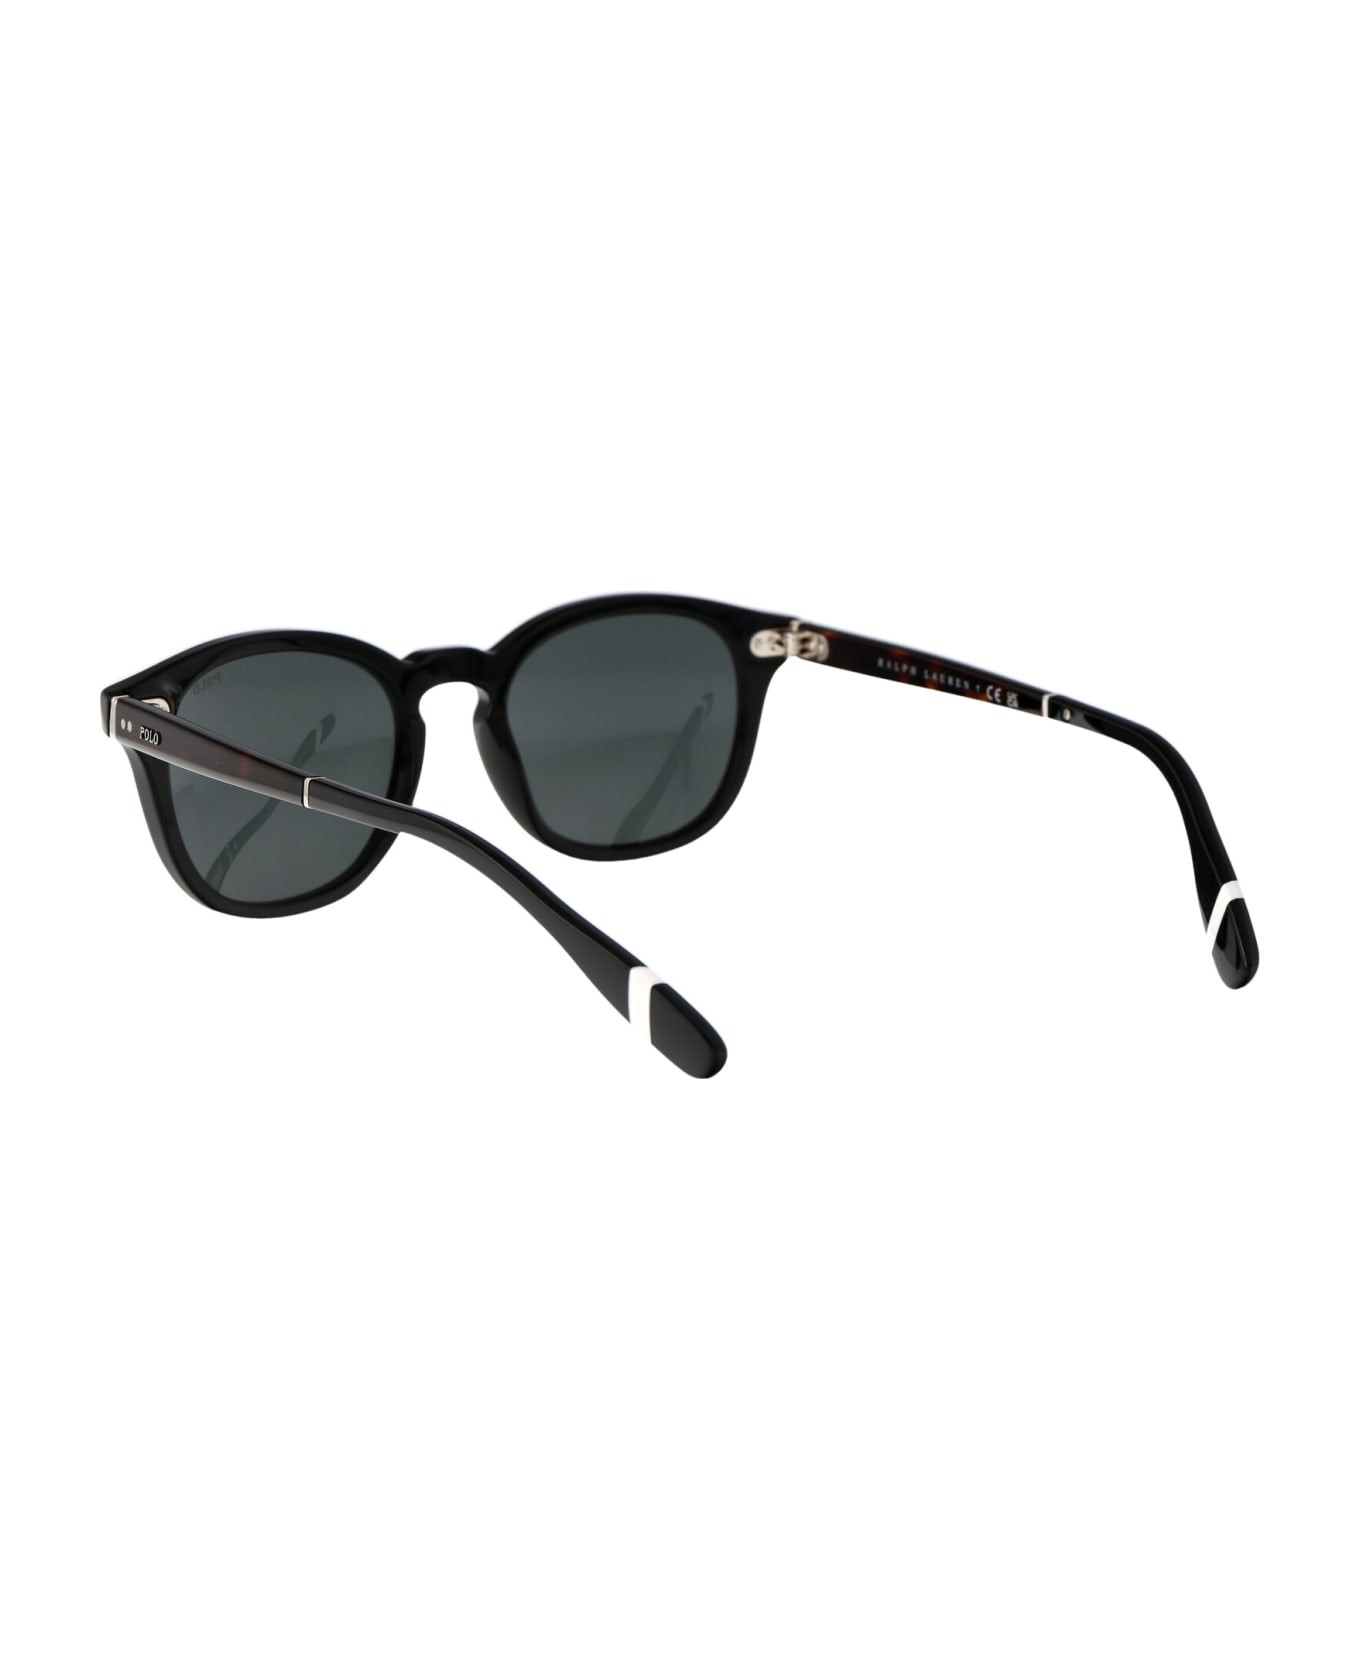 Polo Ralph Lauren 0ph4206 Sunglasses - 500187 SHINY BLACK サングラス